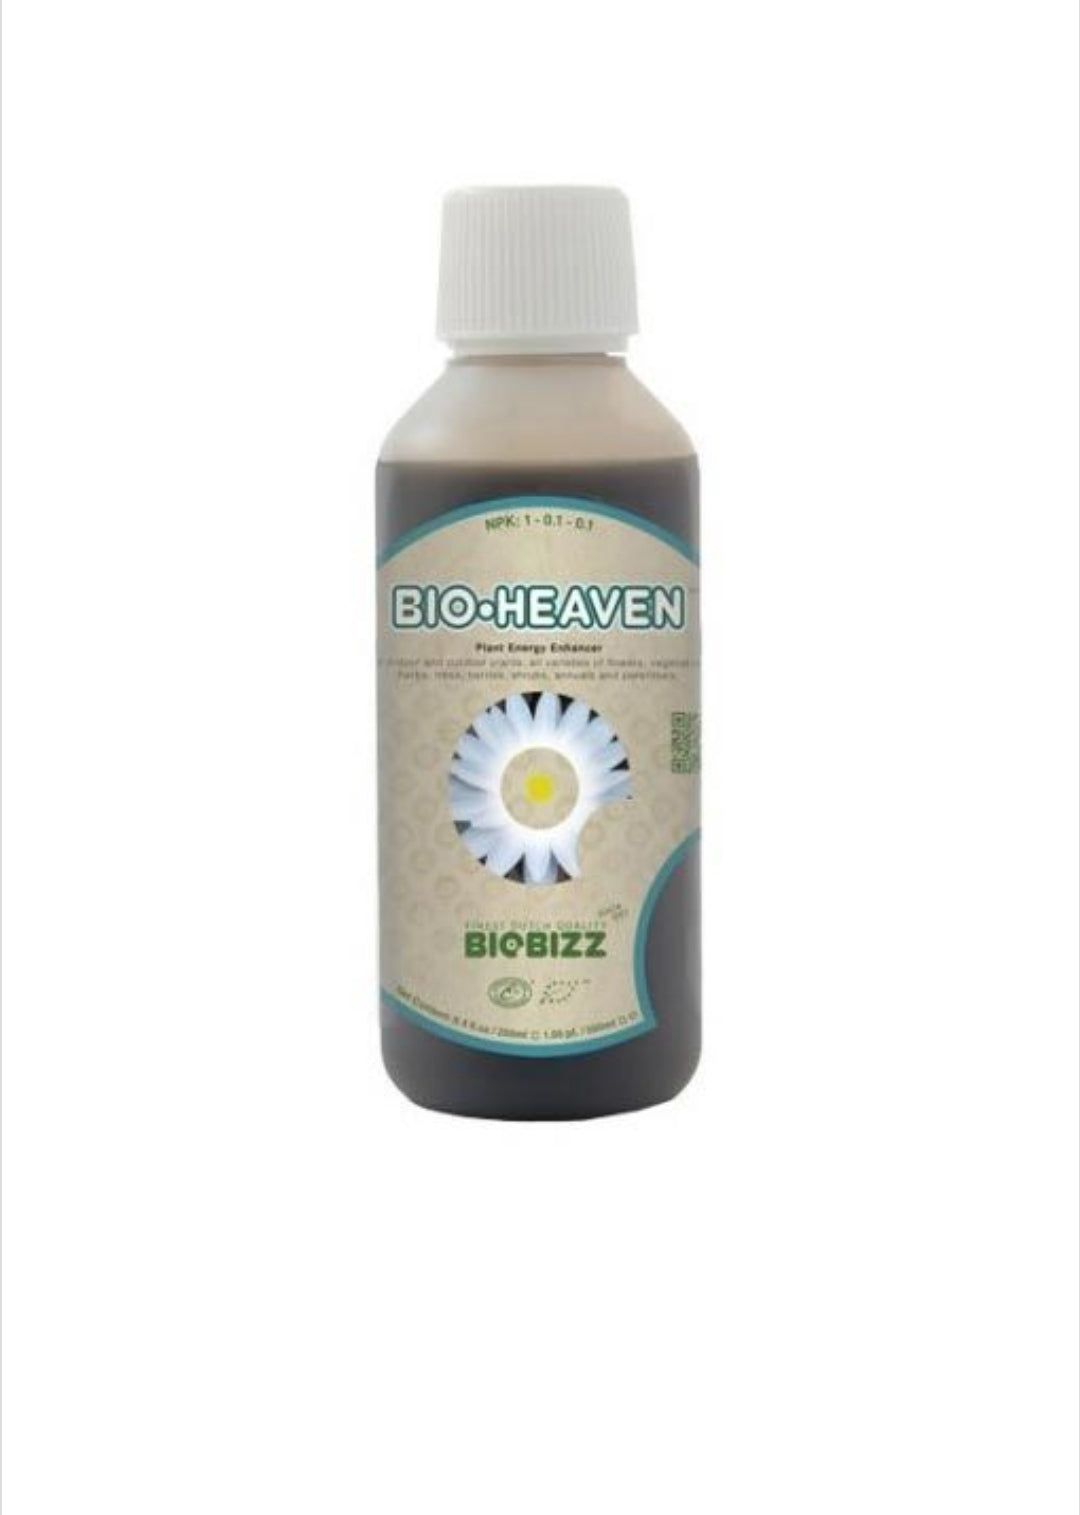 Biobizz - Bioheaven - 250 ml